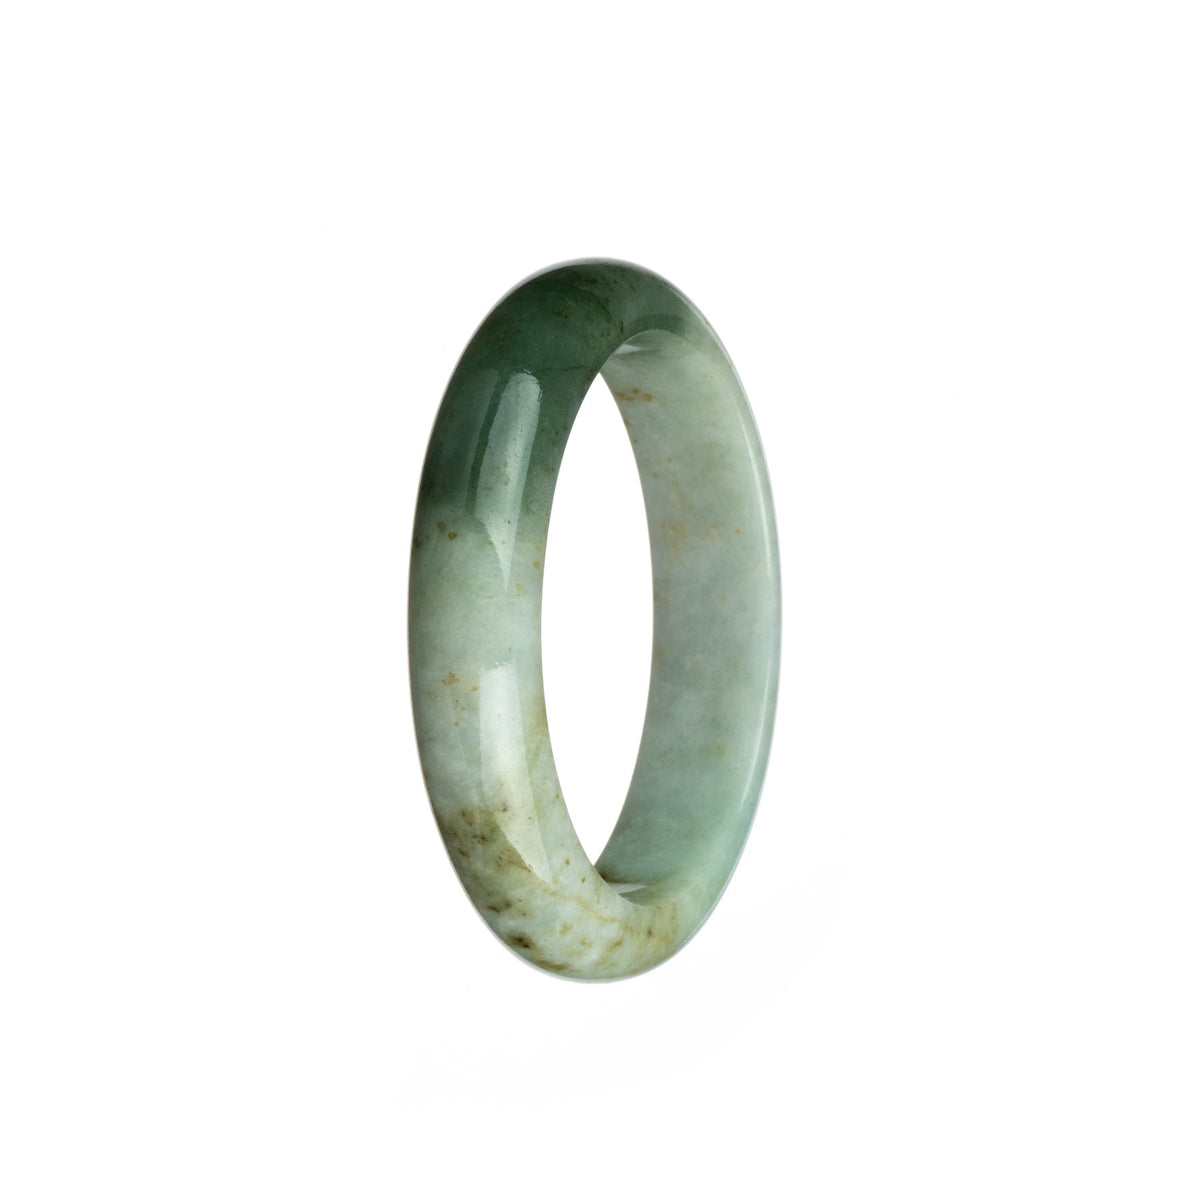 Genuine Type A White and Green Burma Jade Bracelet - 53mm Half Moon